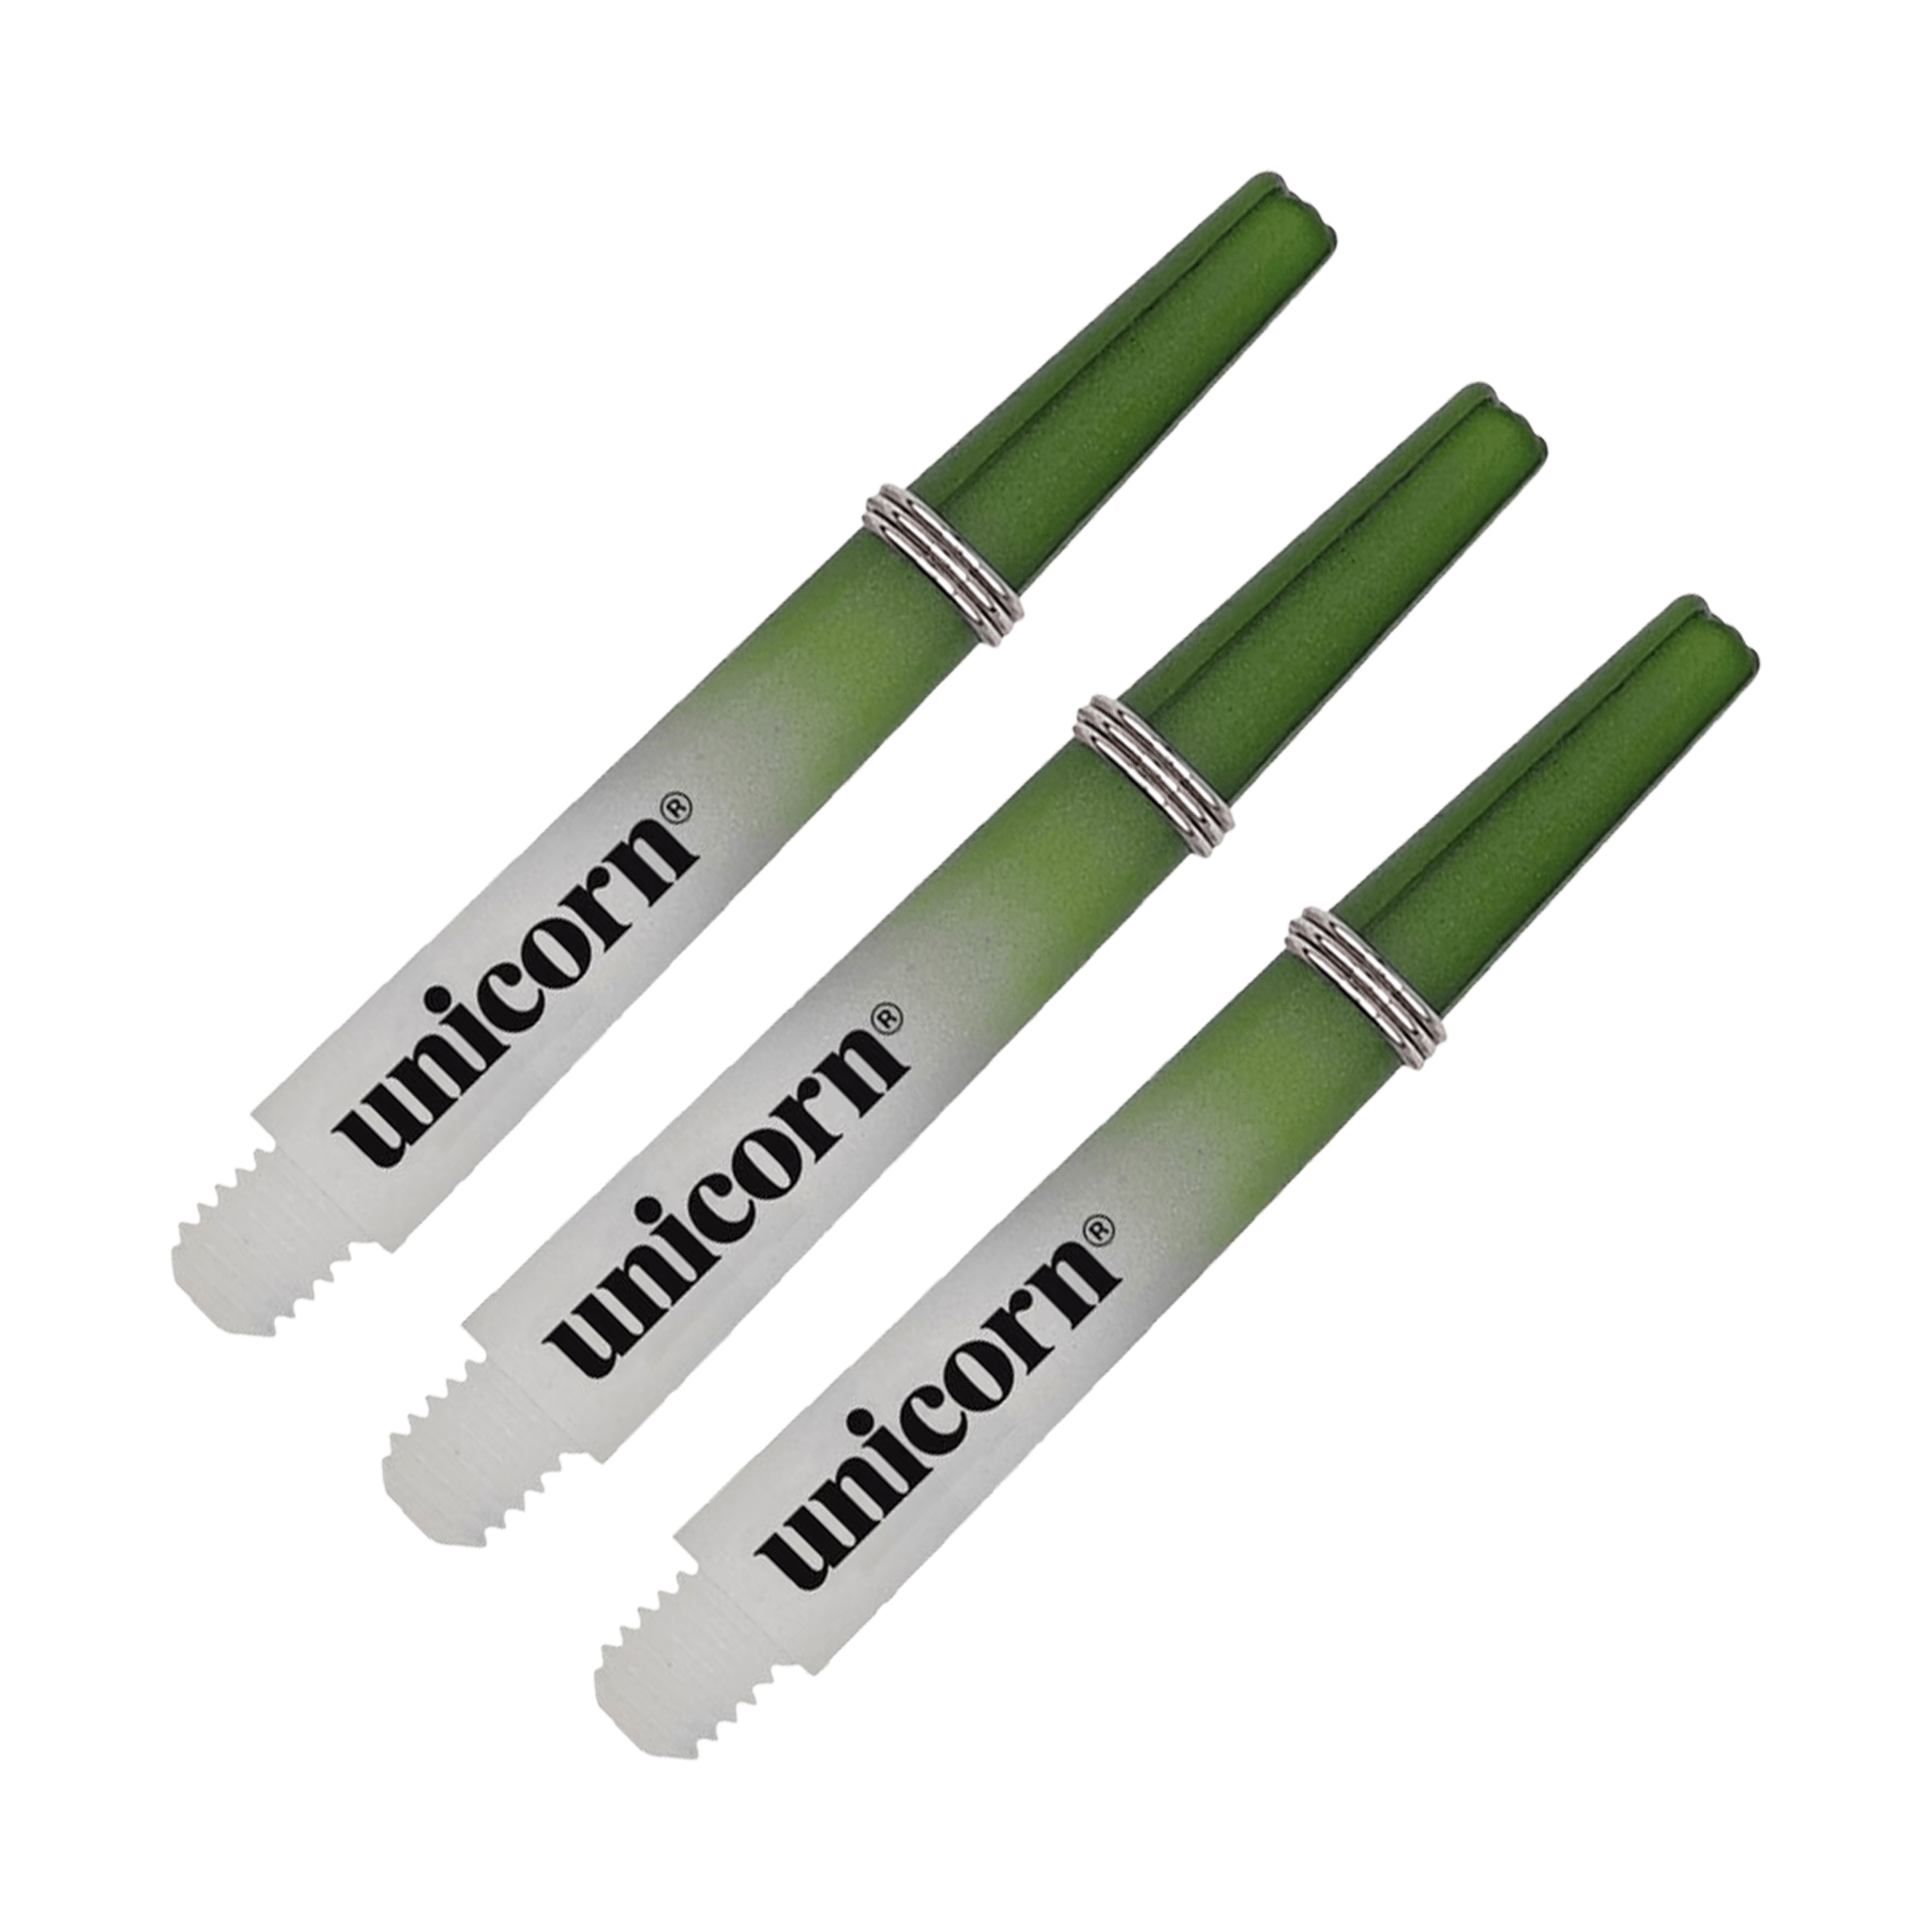 Unicorn Gripper 3 Two Tone Short (34.4 mm) Nylon Dart Shafts Green Shafts